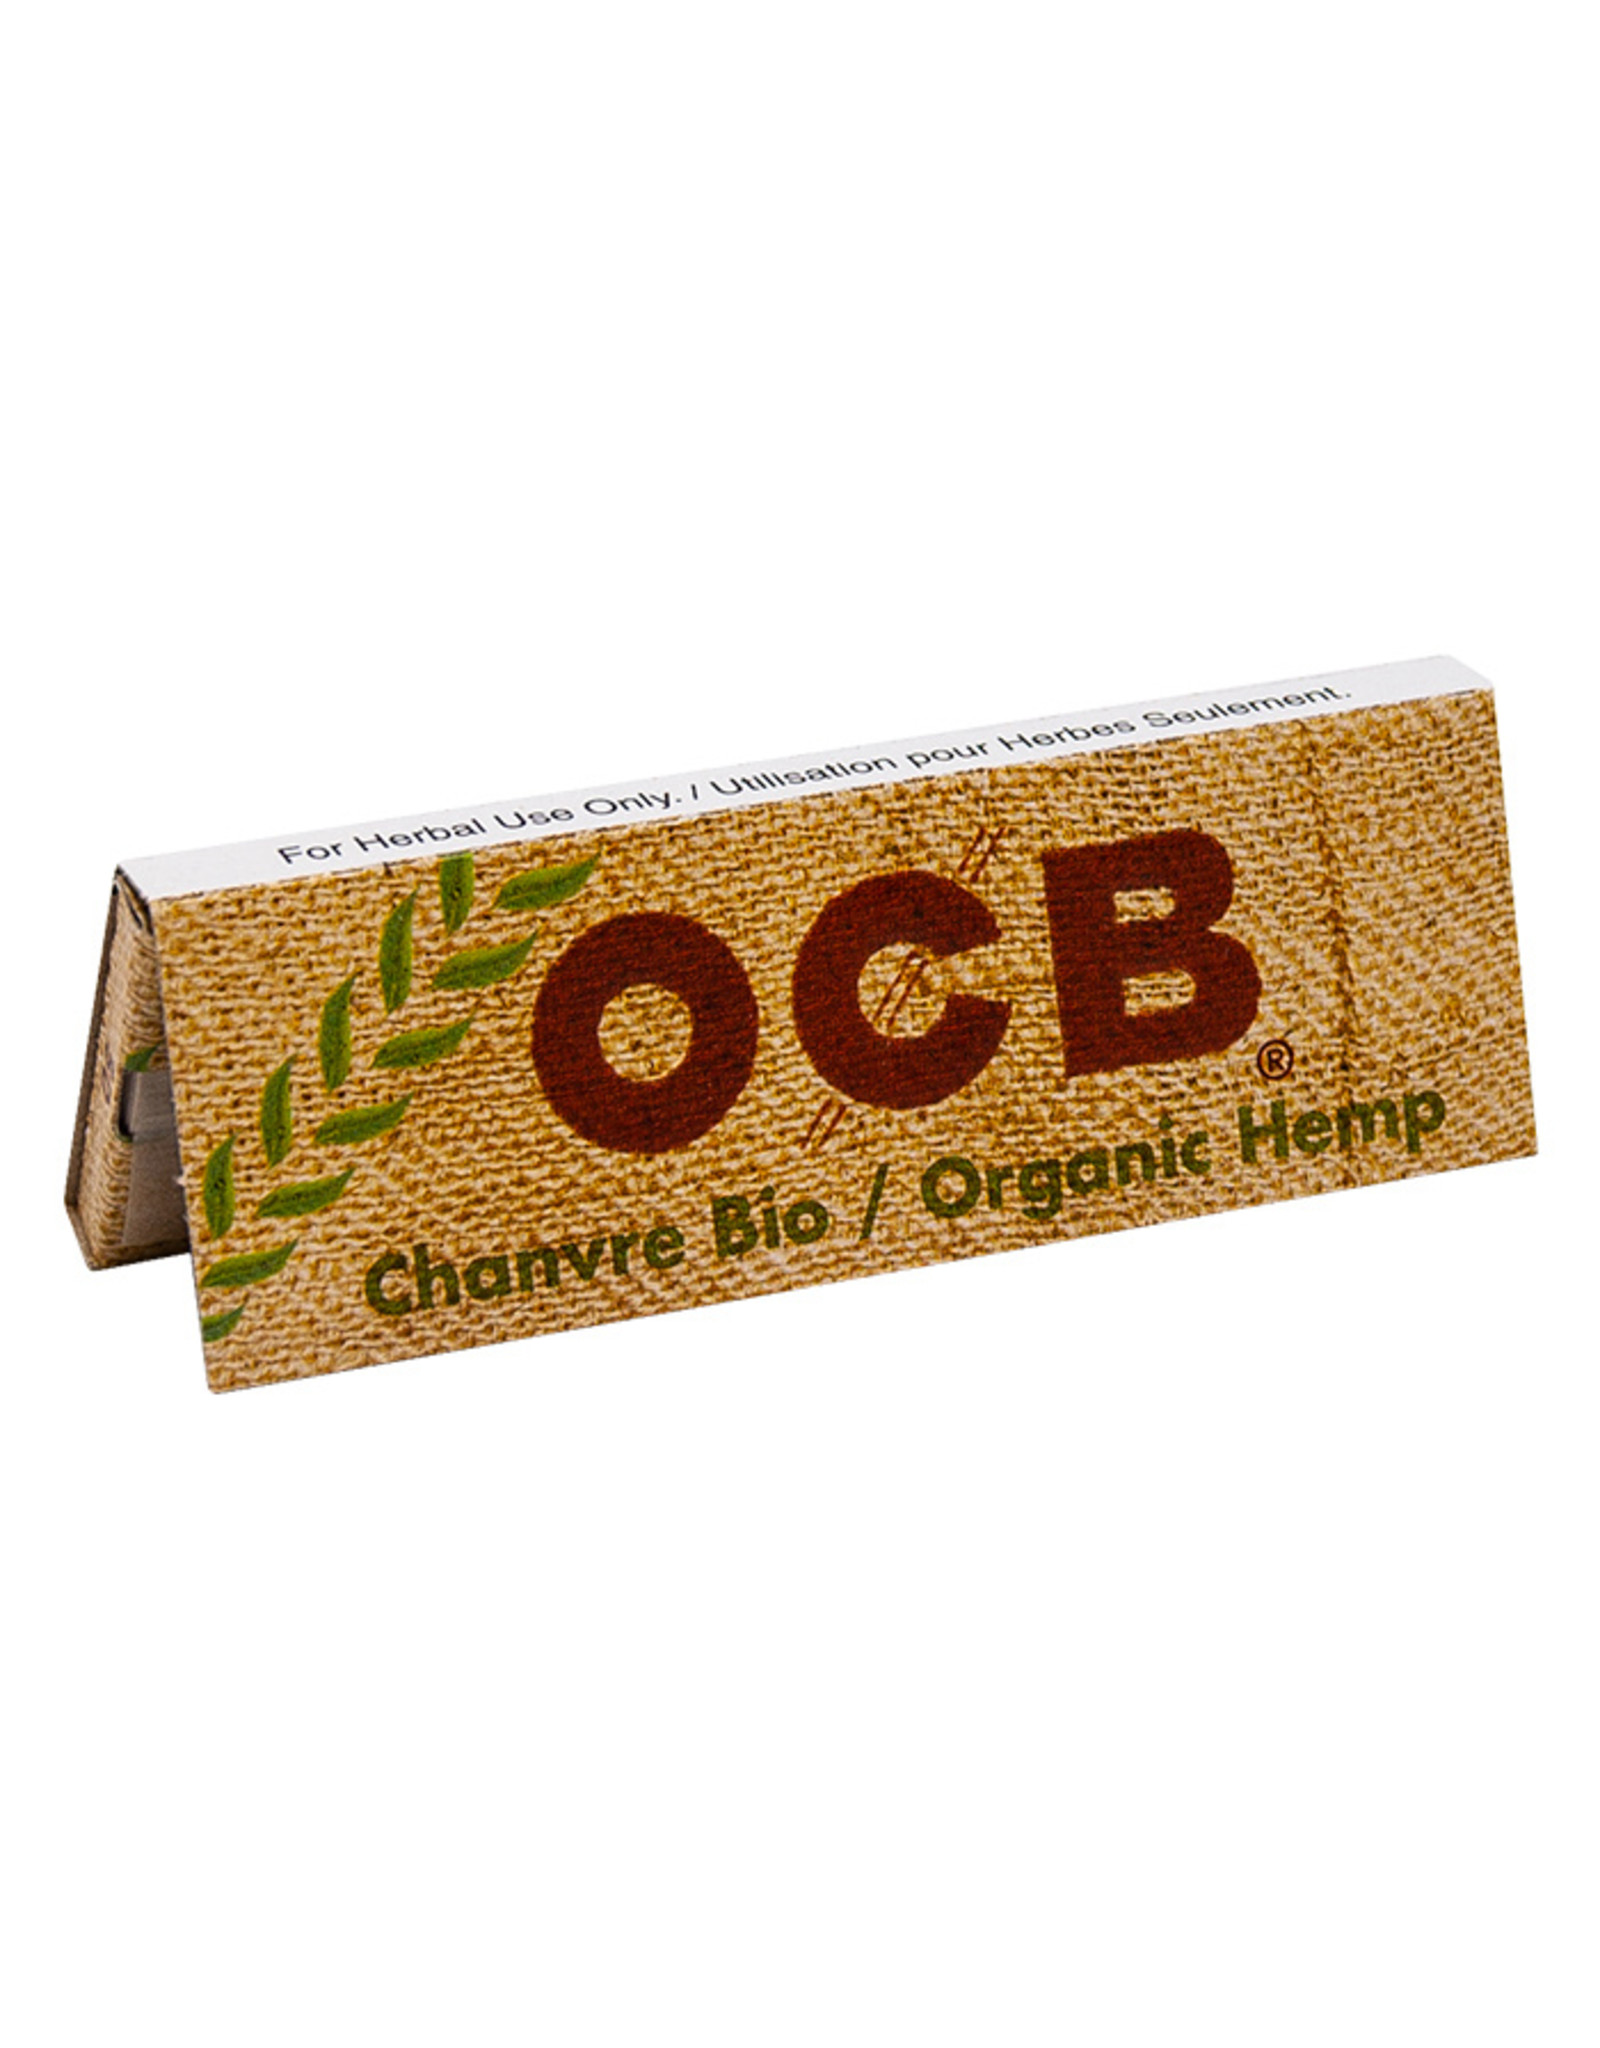 OCB OCB Rolling Papers